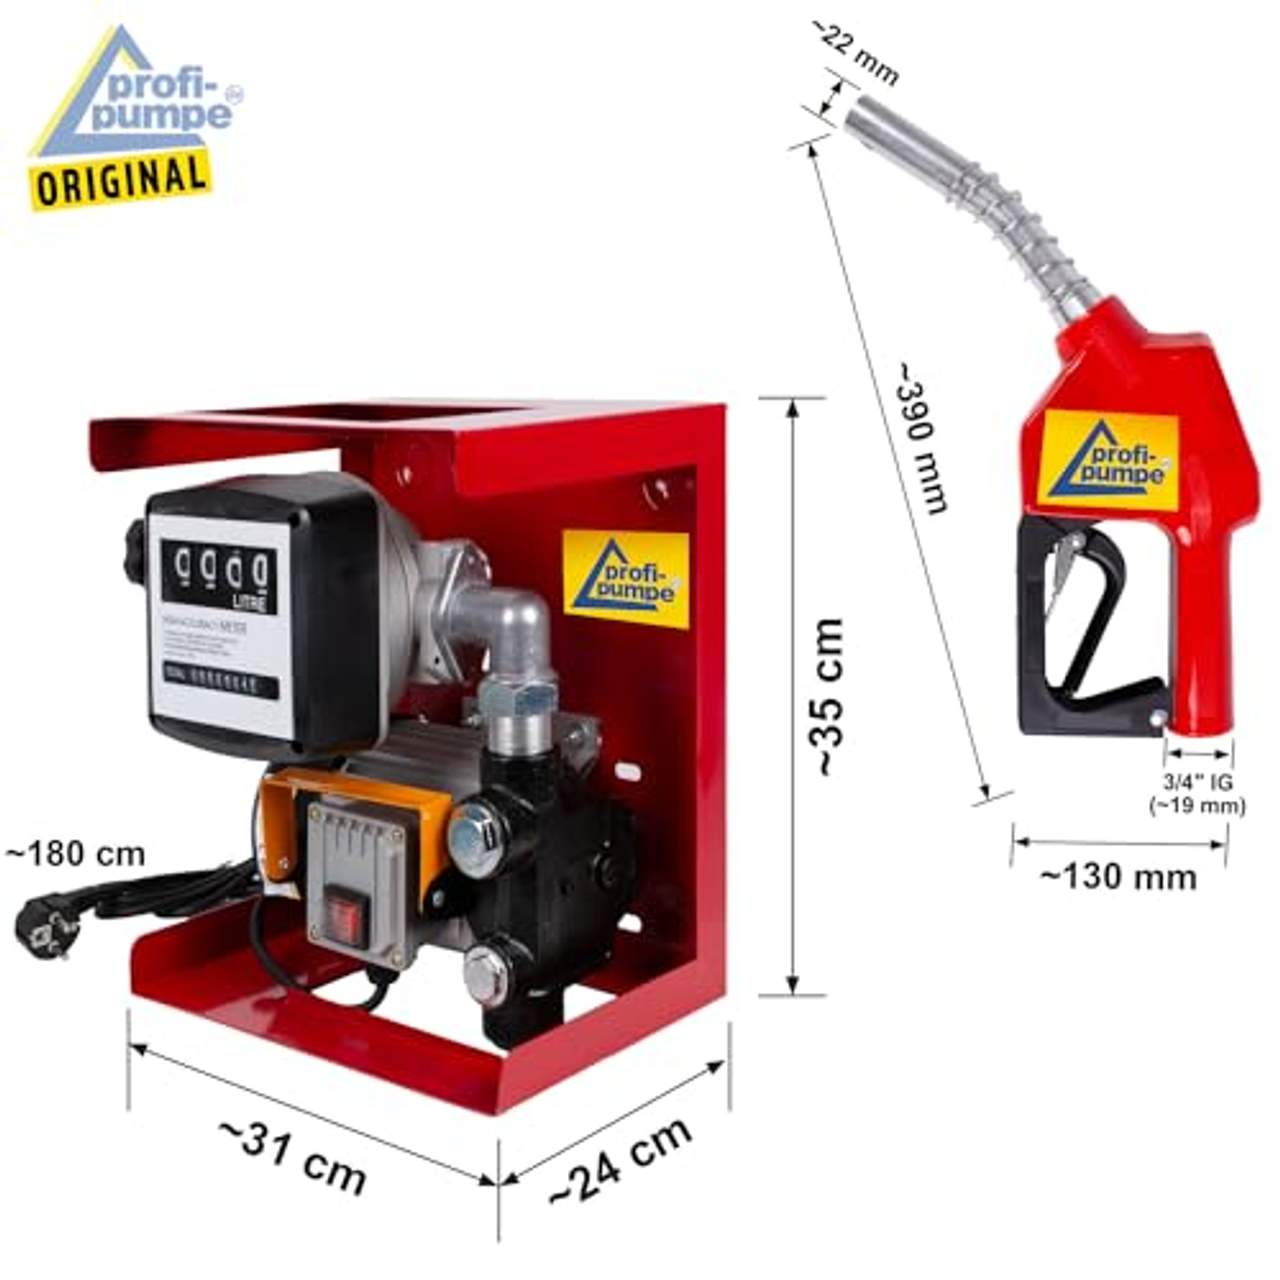 Dieselpumpe Heizölpumpe Biodiesel-Pumpe Umfüllpumpe Selbstansaugend Exelenz-2-230v-Pumpen-Set